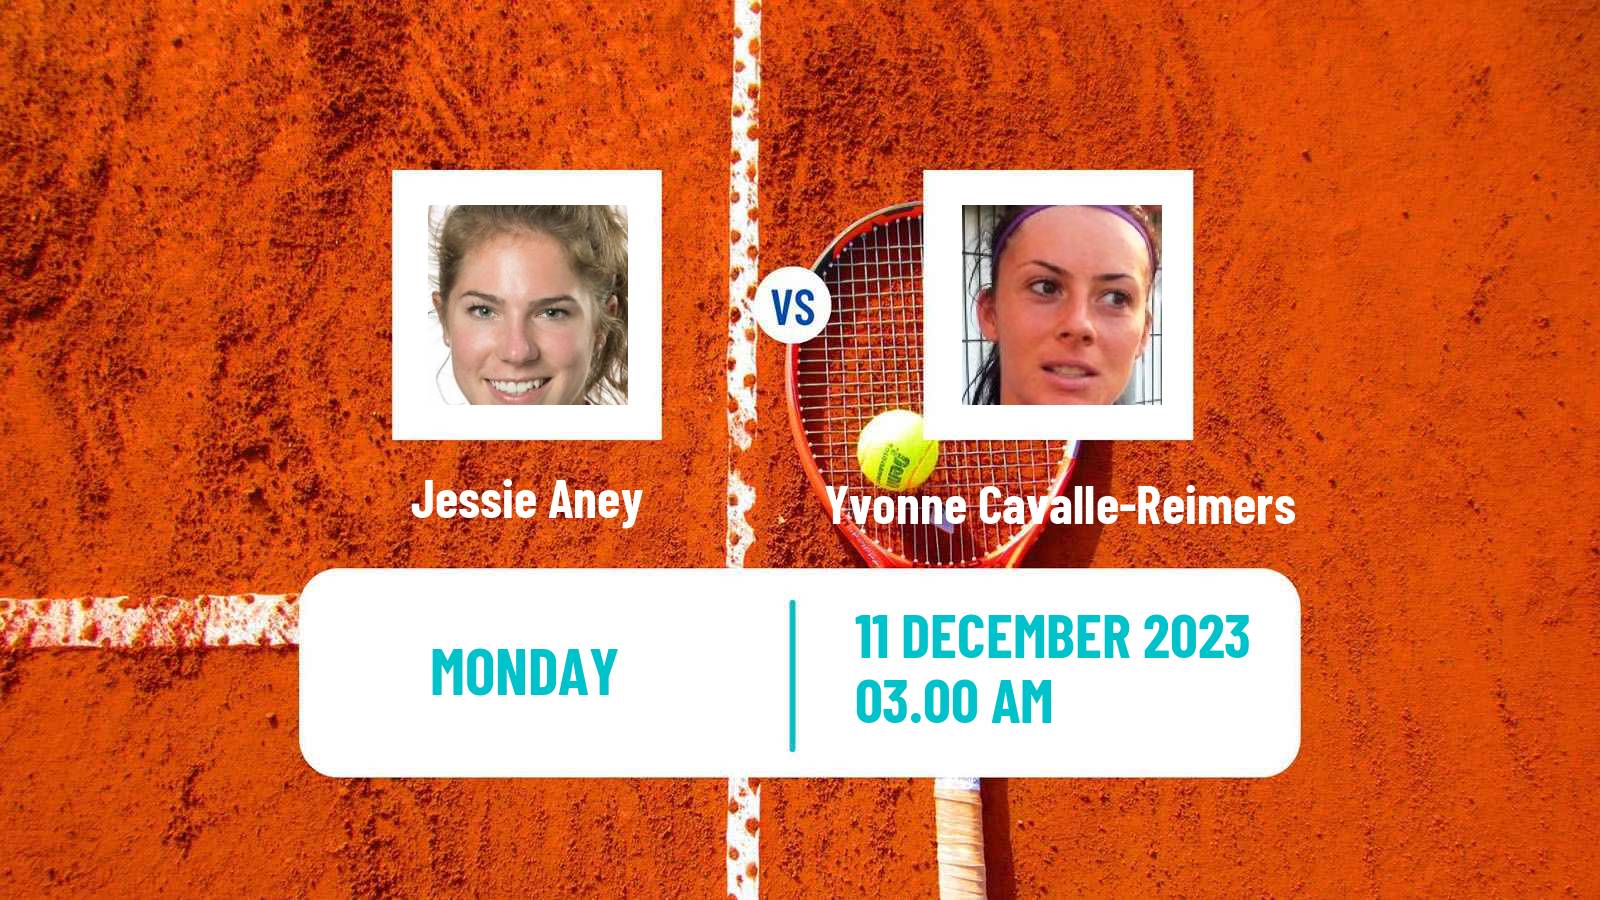 Tennis ITF W25 Nairobi Women Jessie Aney - Yvonne Cavalle-Reimers